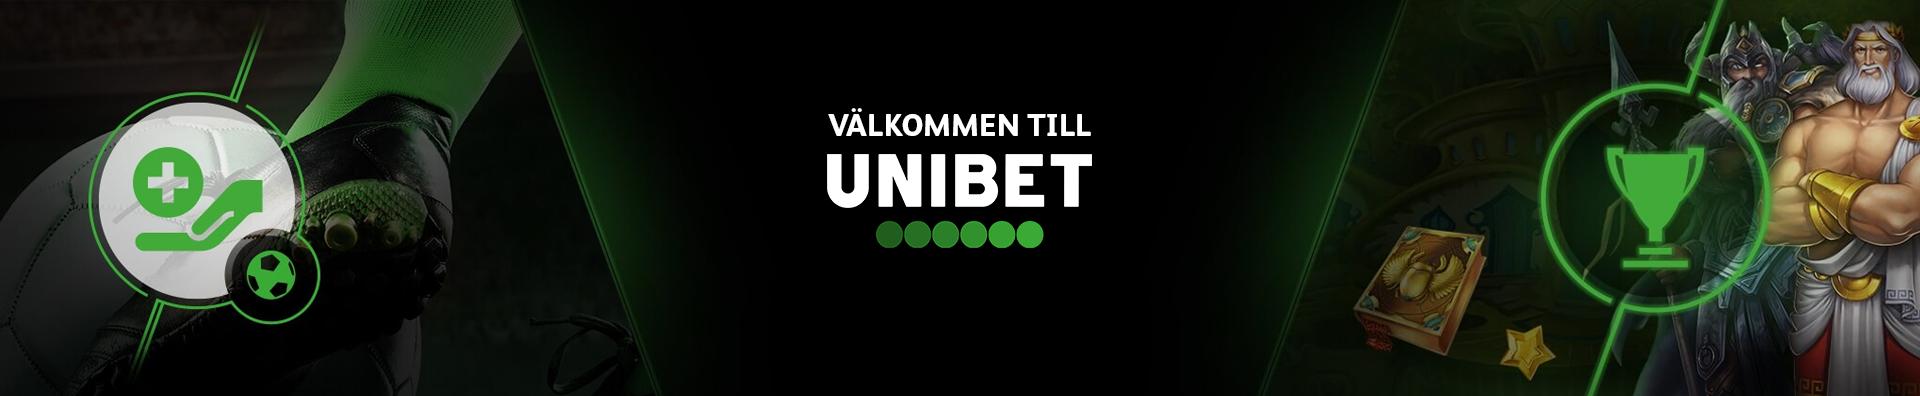 Unibet recension banner ny